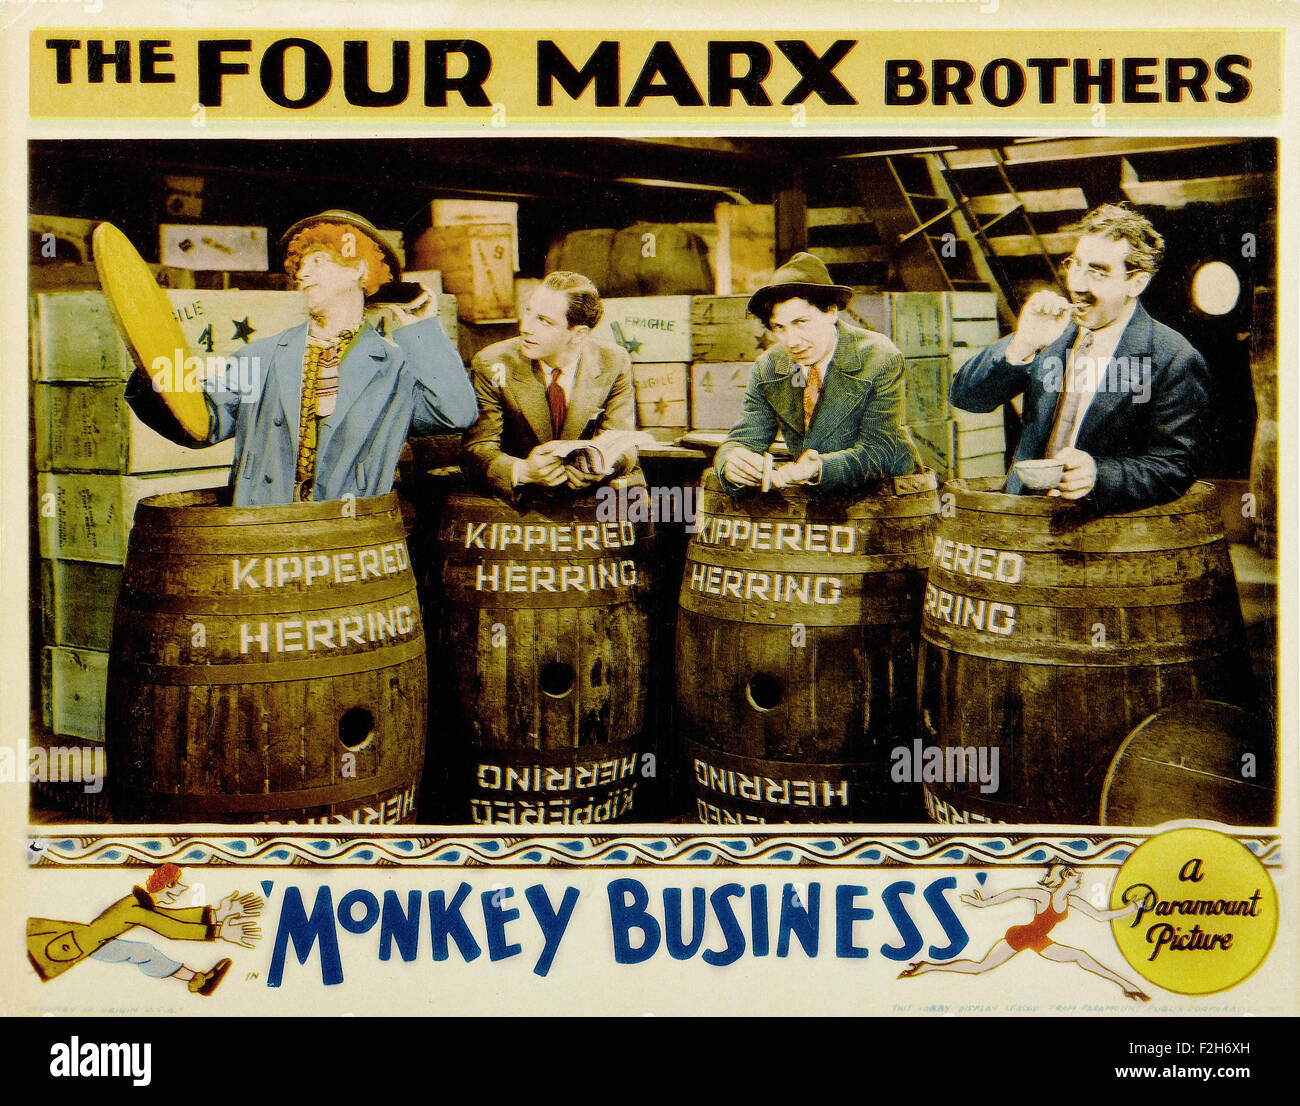 Monkey Business (1931) 02 - Movie Poster Stock Photo